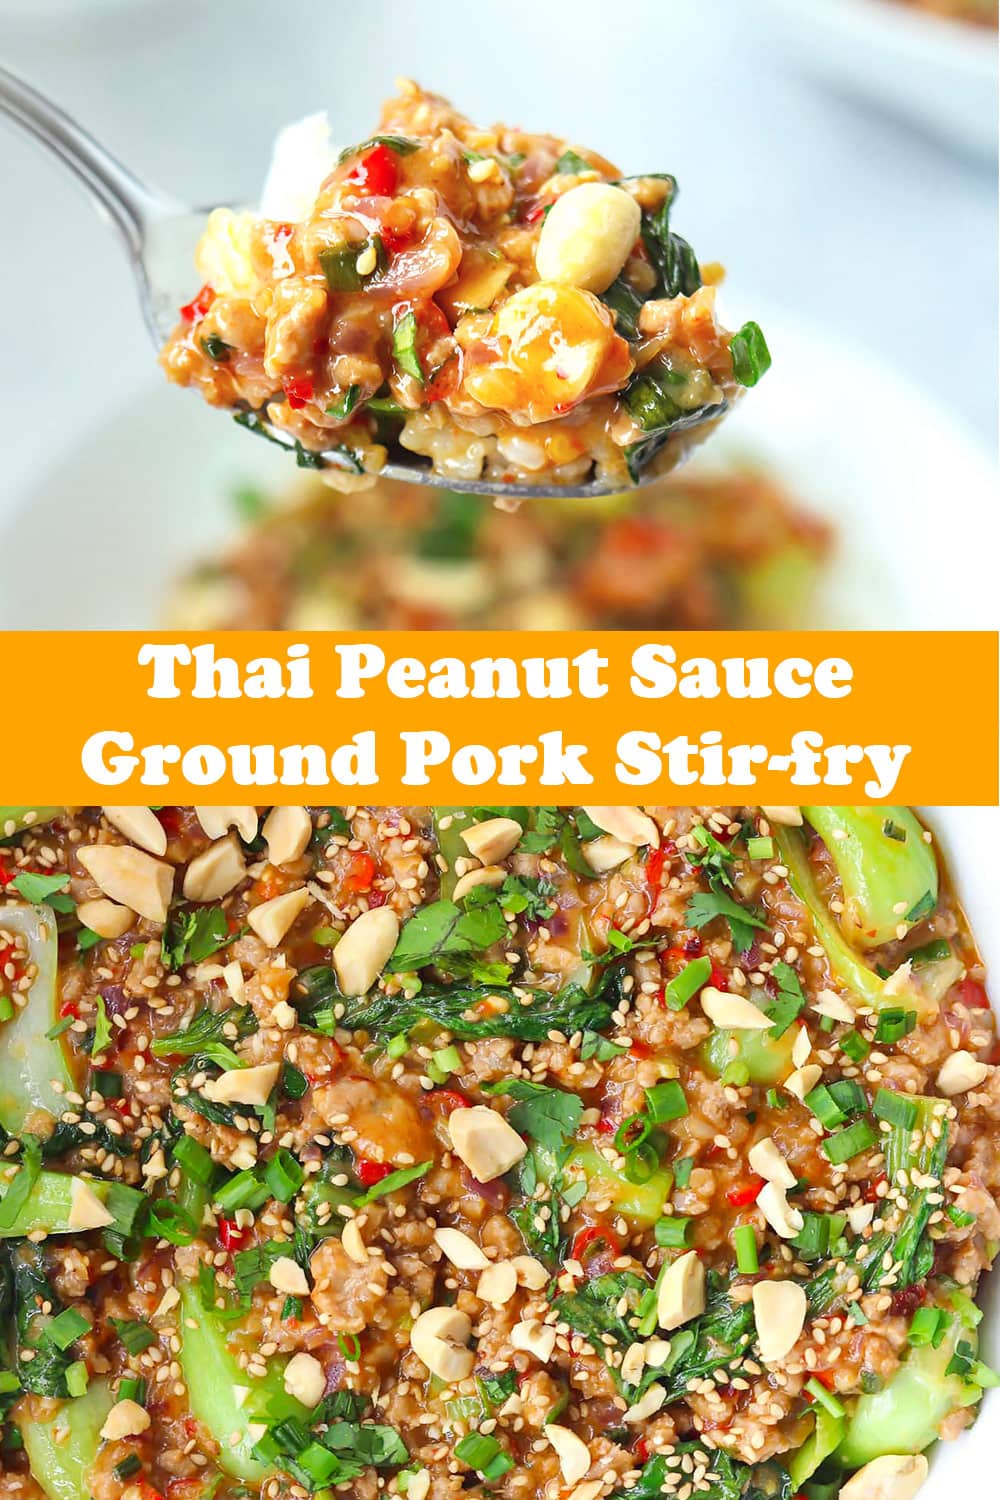 Peanut Sauce Ground Pork Stir-fry (30 minute recipe) - That Spicy Chick